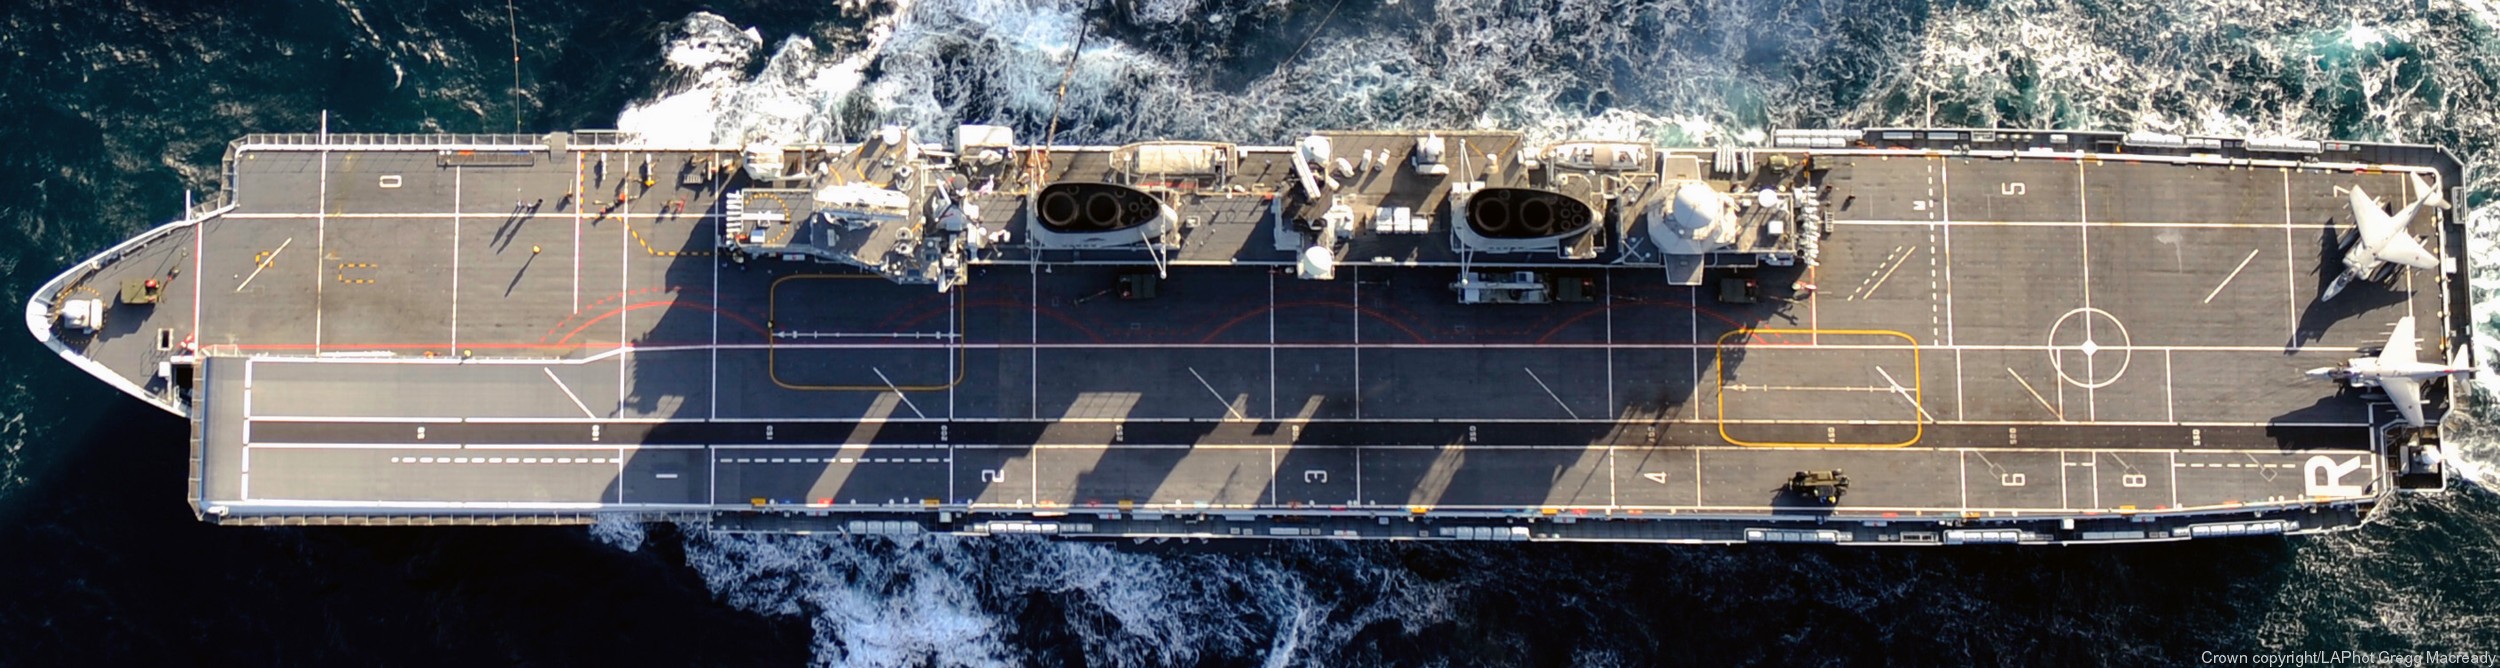 r-07 hms ark royal invincible class aircraft carrier royal navy 14 flight deck